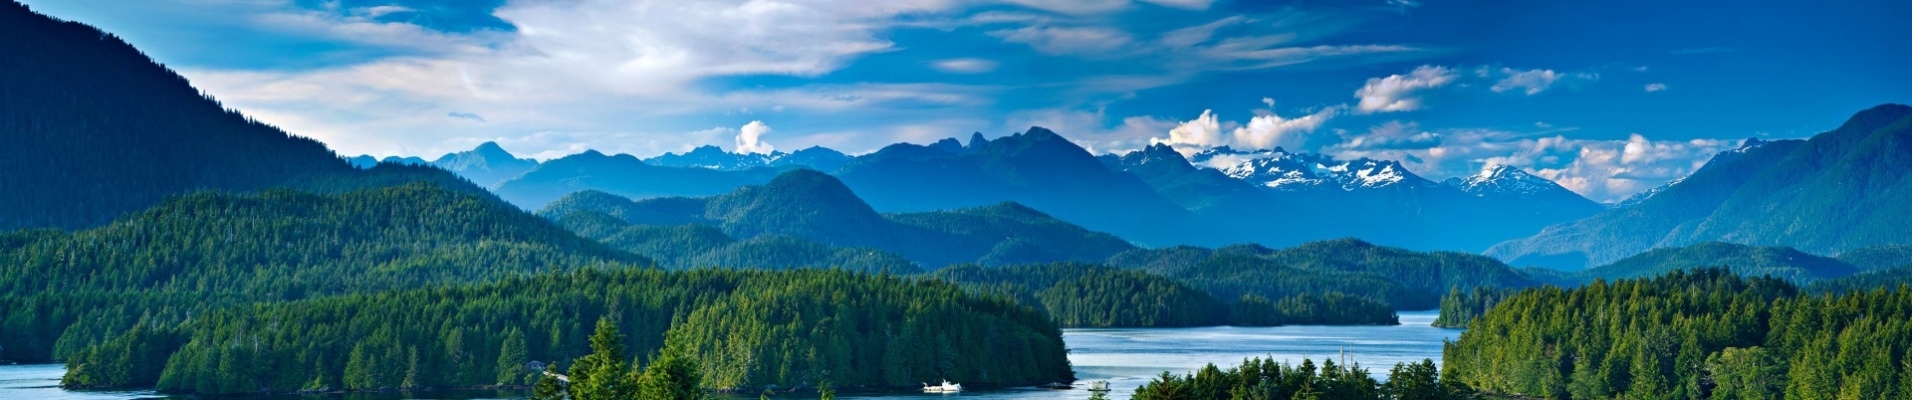 vue-panoramique-tofino-ile-vancouver-canada